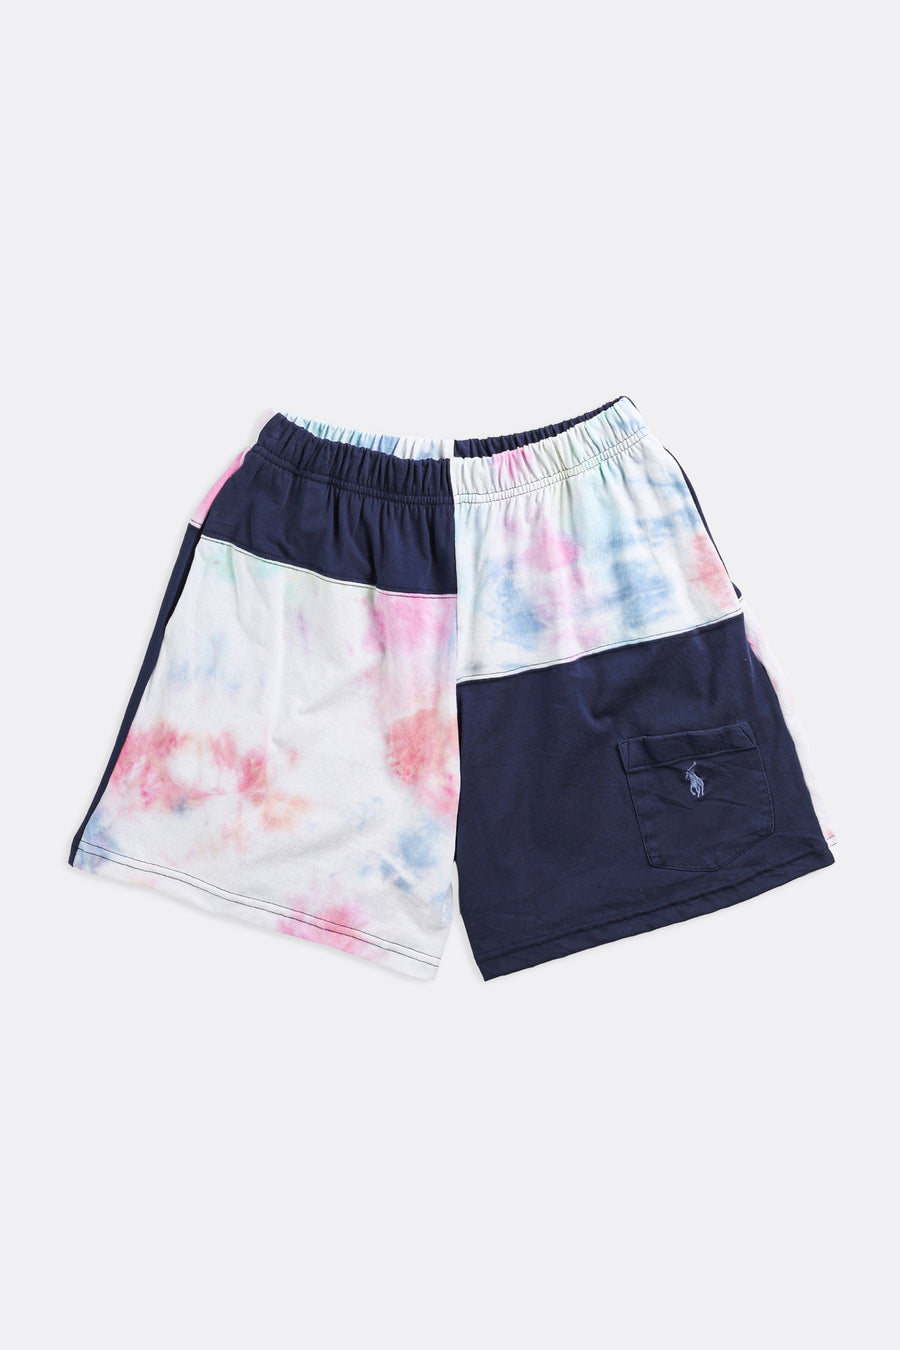 Unisex Rework Polo Patchwork Tee Shorts - Women's S, Men's XS